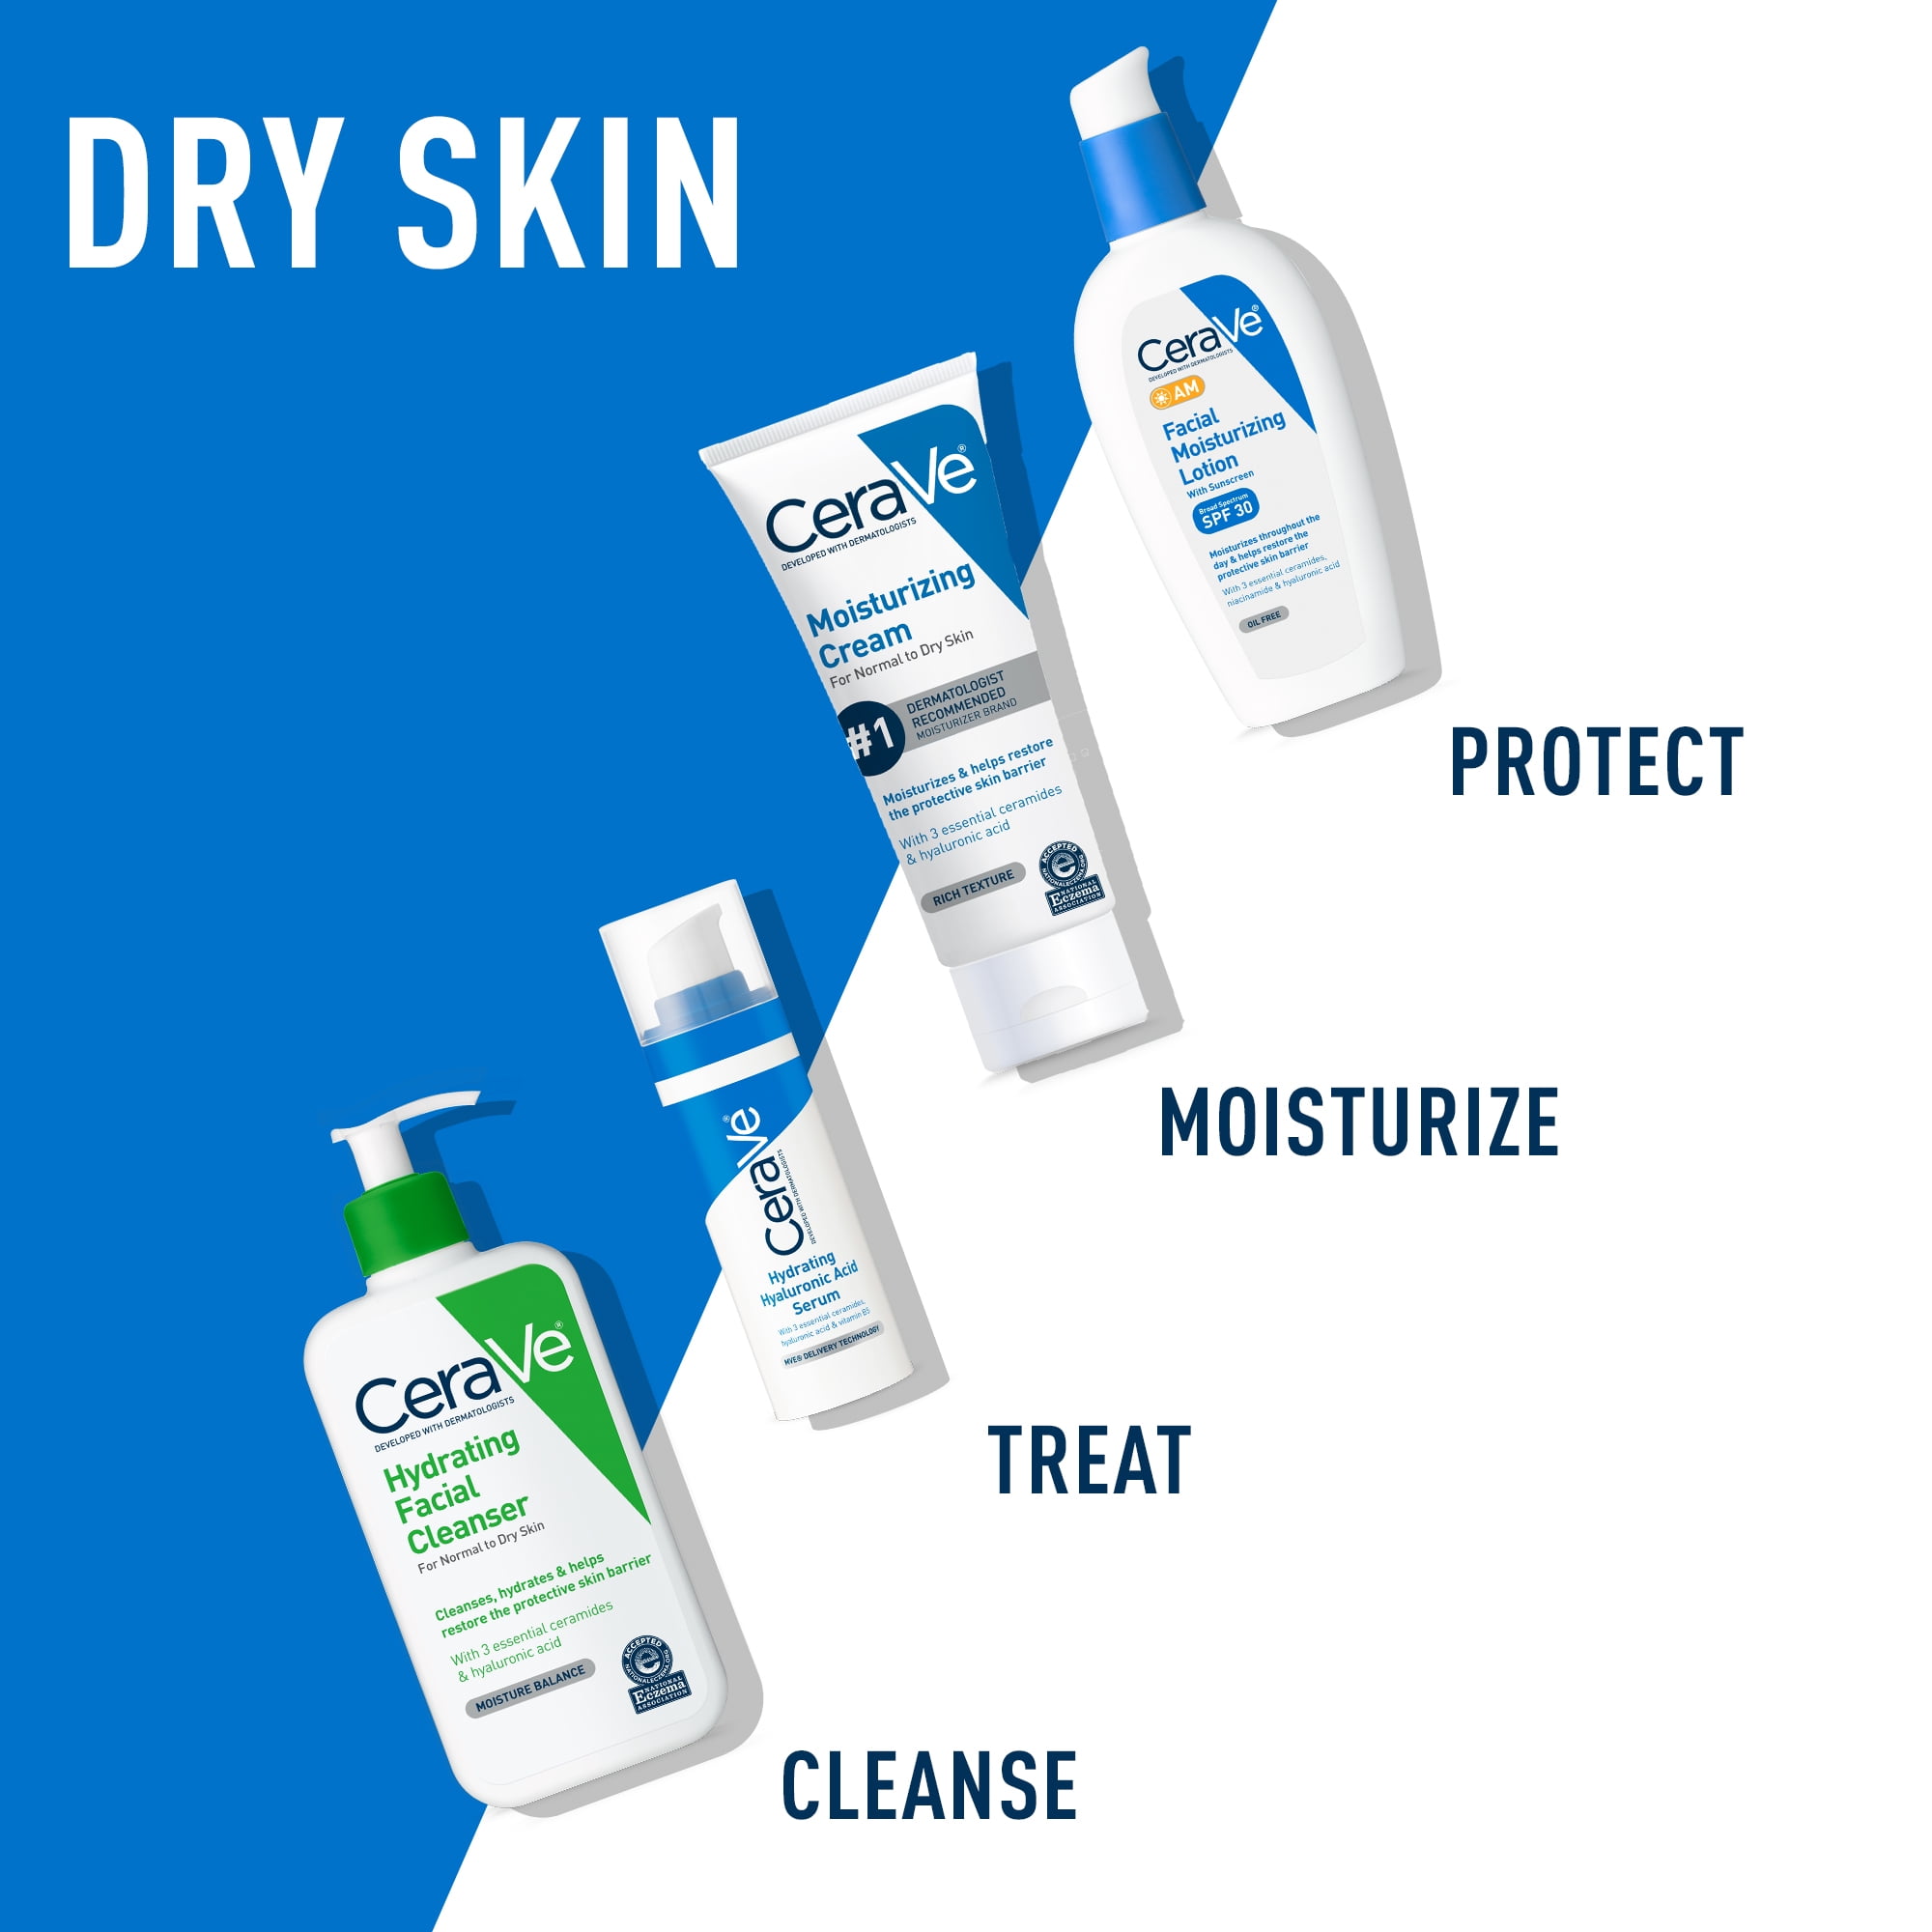 Ræv klint Fellow CeraVe Moisturizing Cream for Face and Body, Moisturizer for Normal to Dry  SKin, 8 oz. - Walmart.com